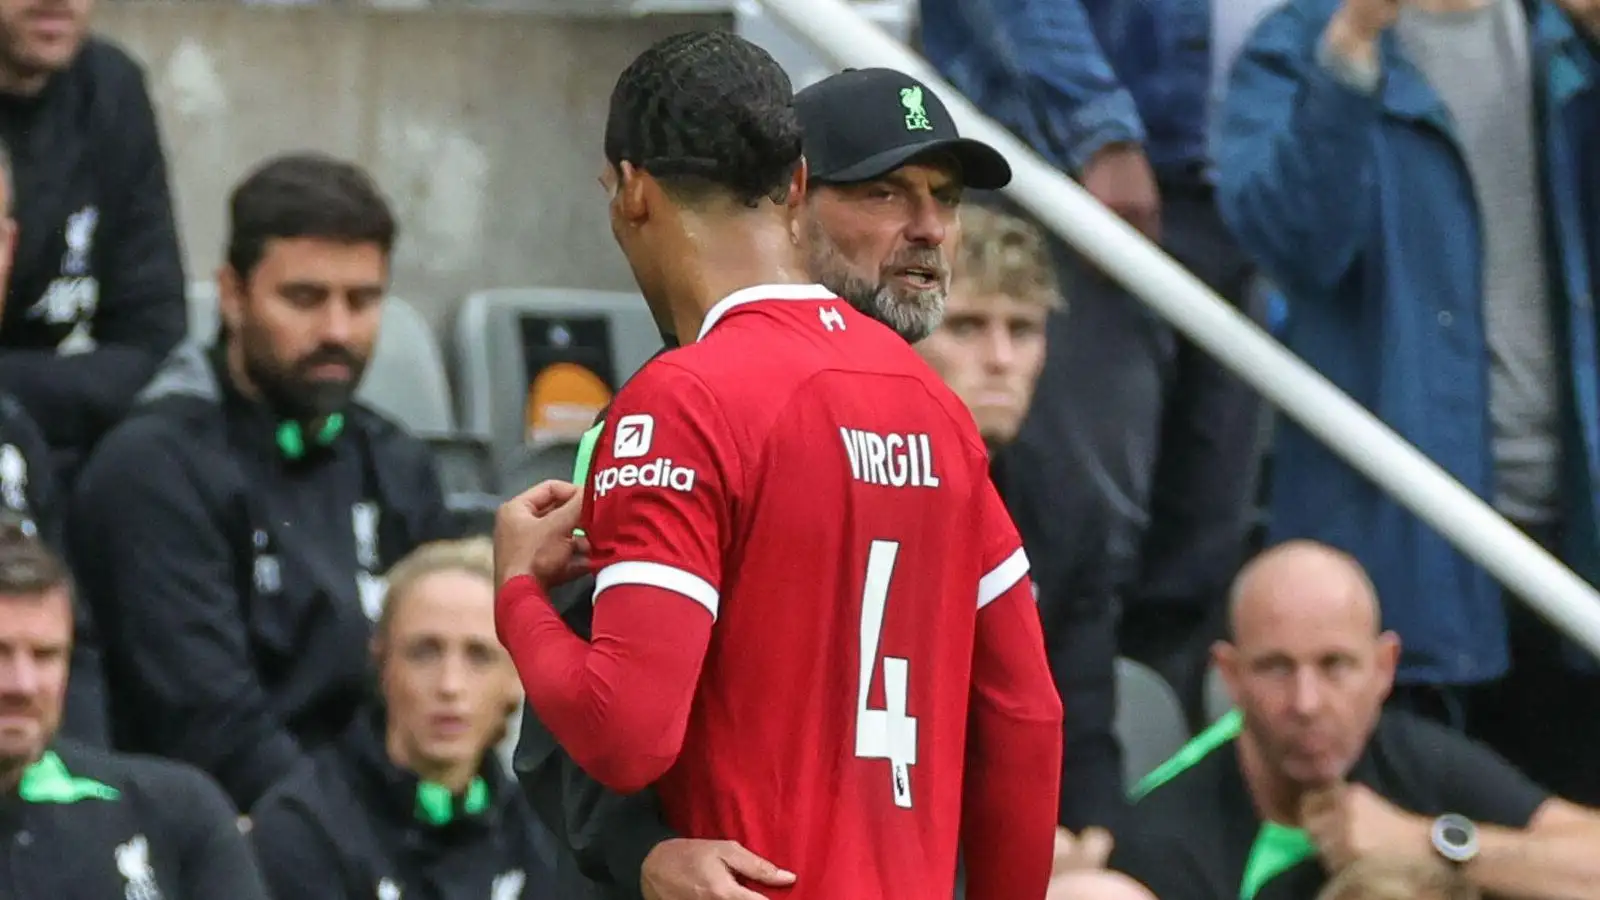 Virgil van Dijk is embraced by Liverpool manager Jurgen Klopp